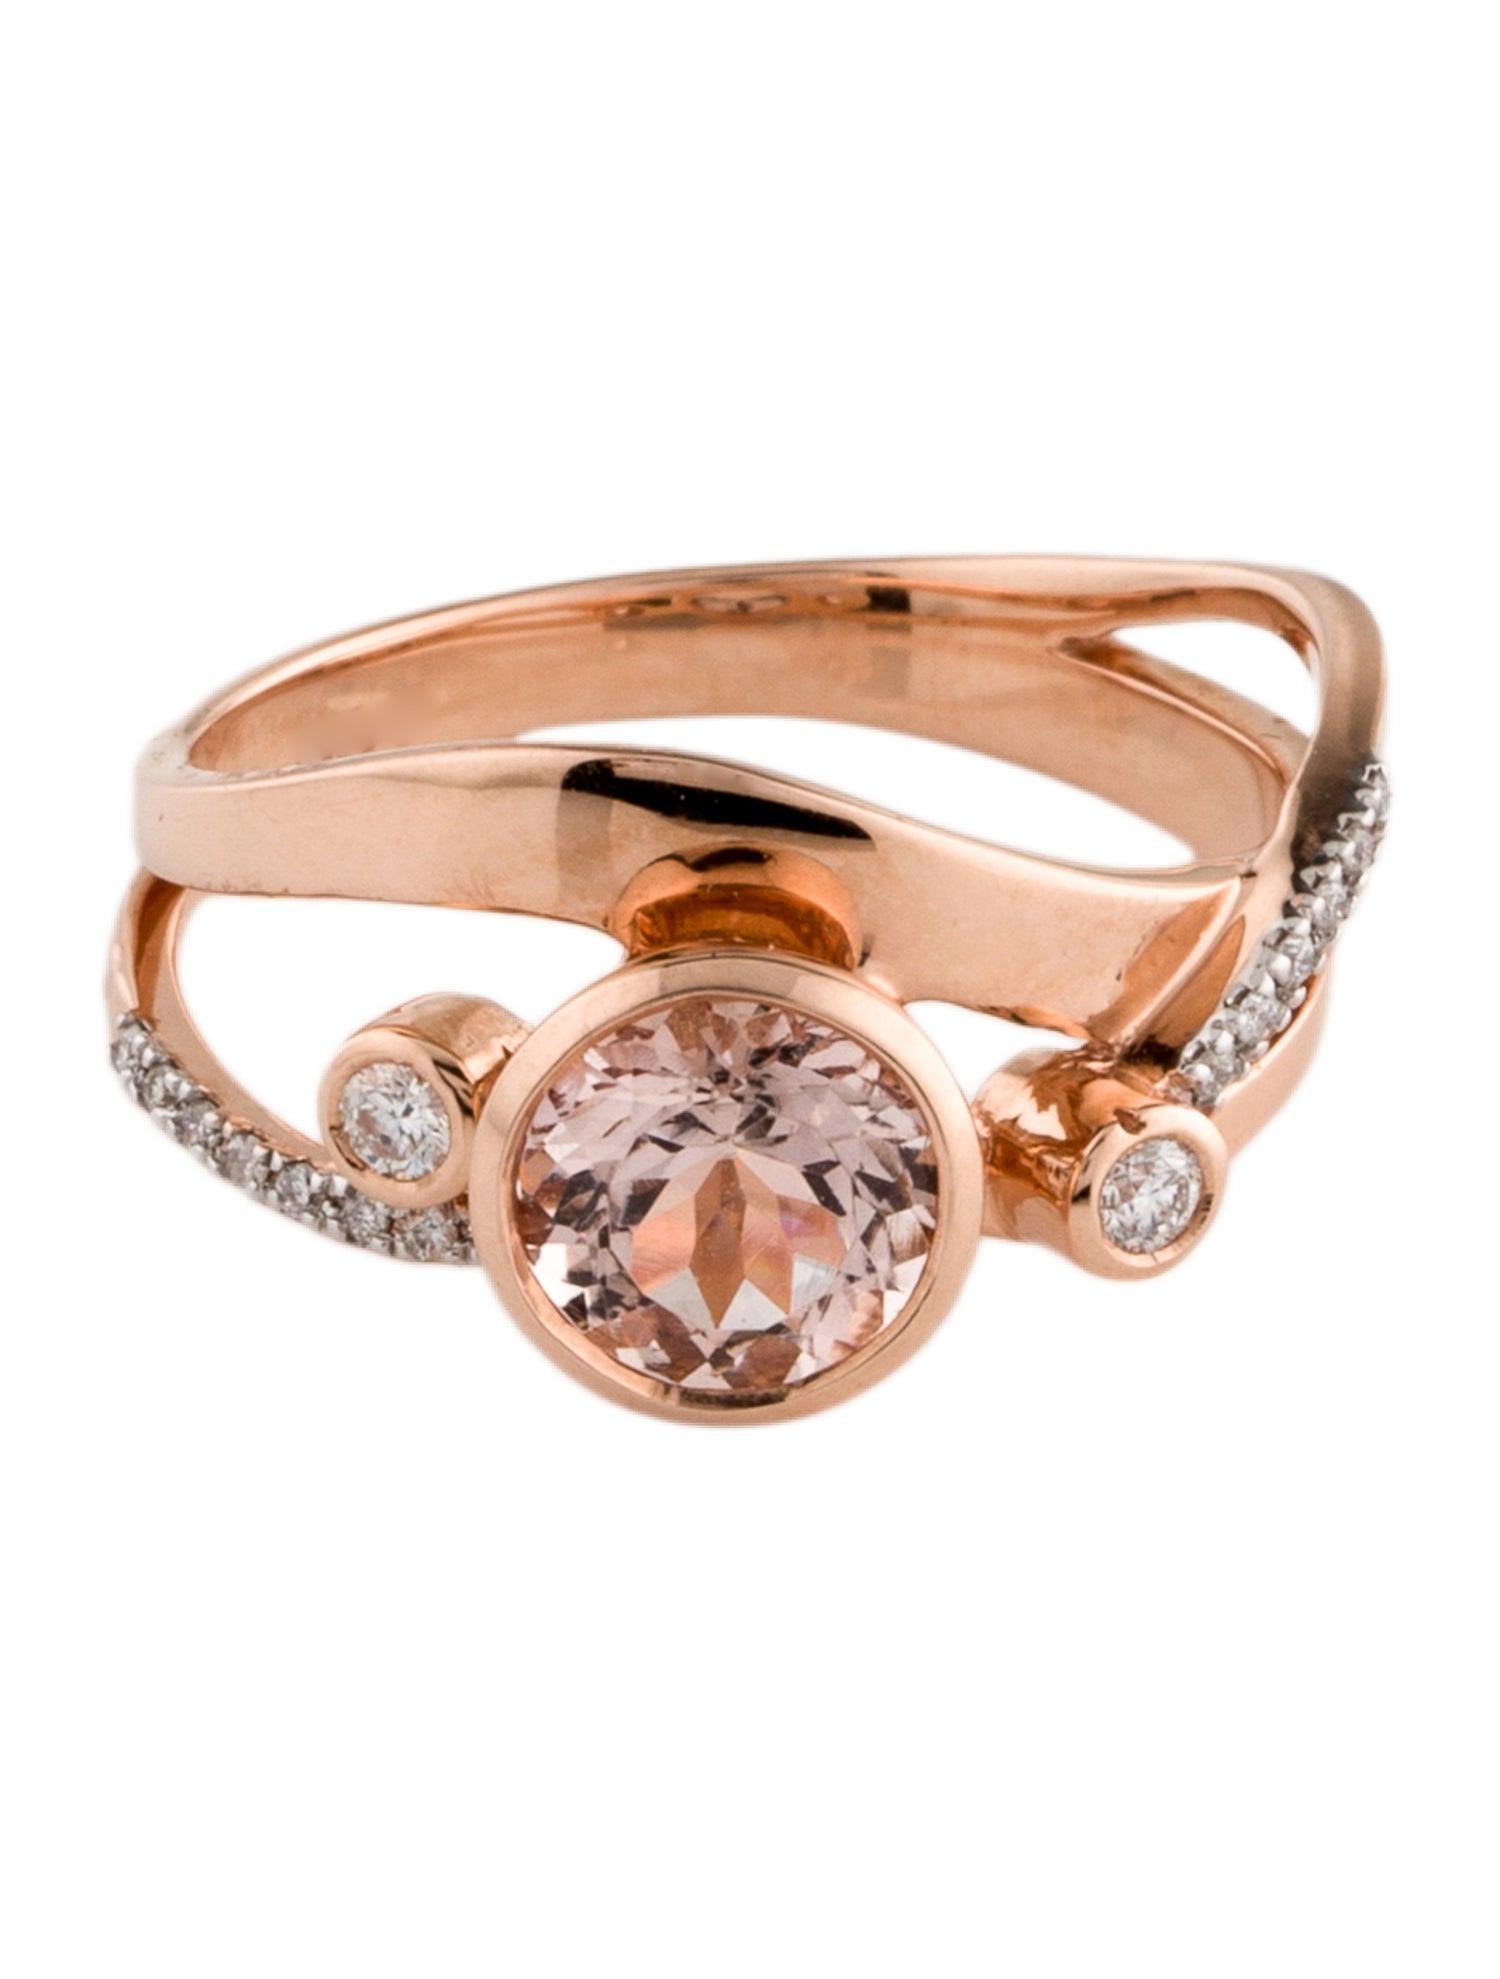 Rose Cut Elegant 14K Rose Gold Morganite & Diamond Cocktail Ring, 1.38ctw, Size 7.5 For Sale